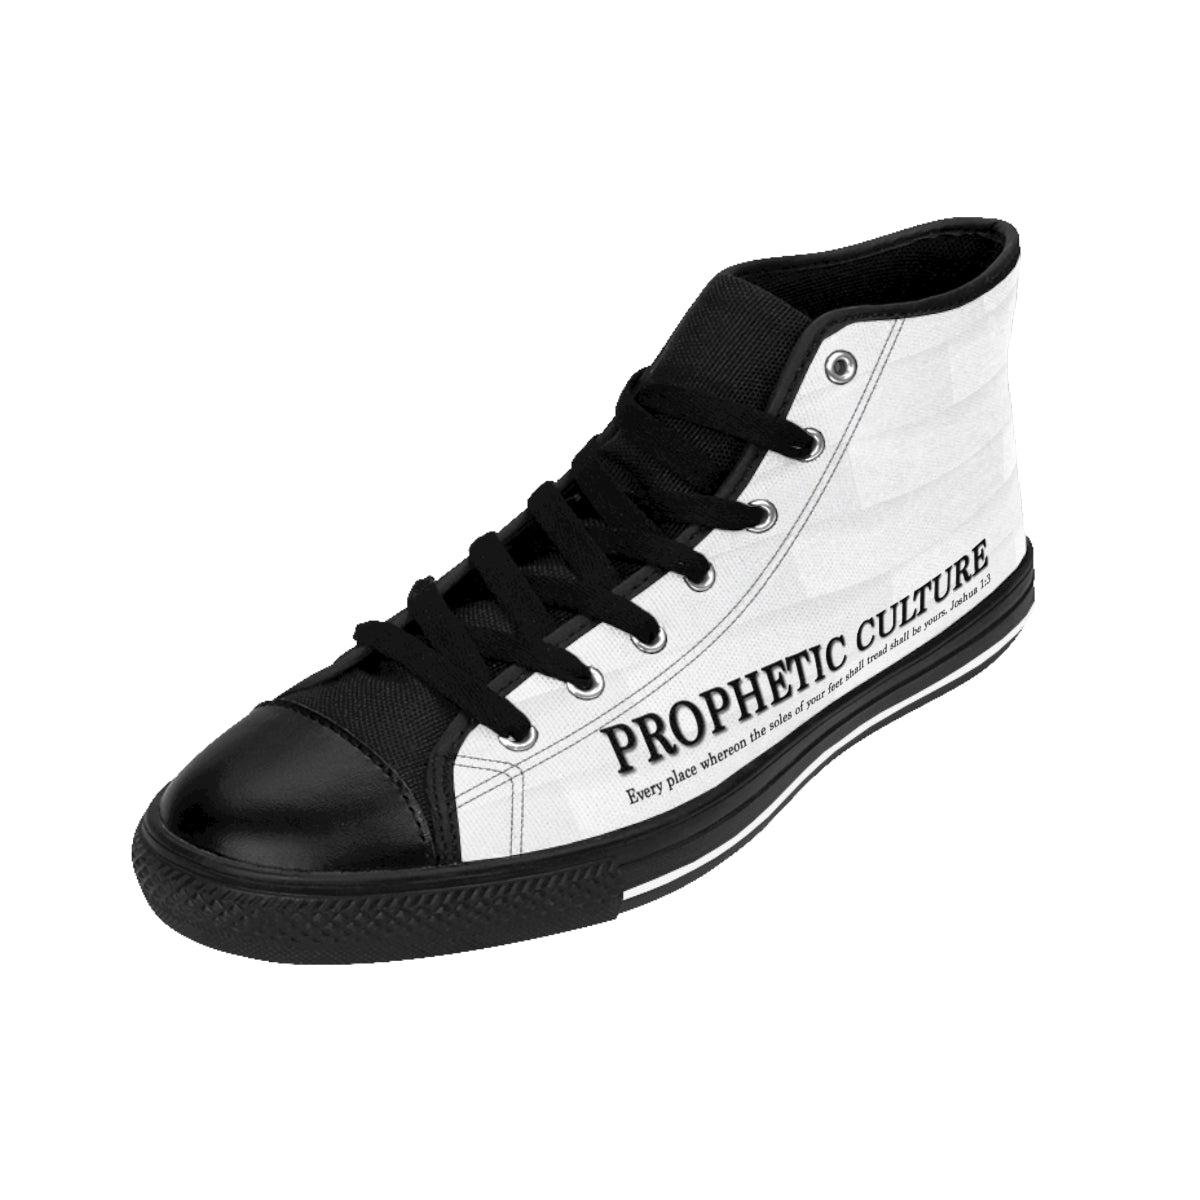 Prophetic Culture Sneakers Black & White